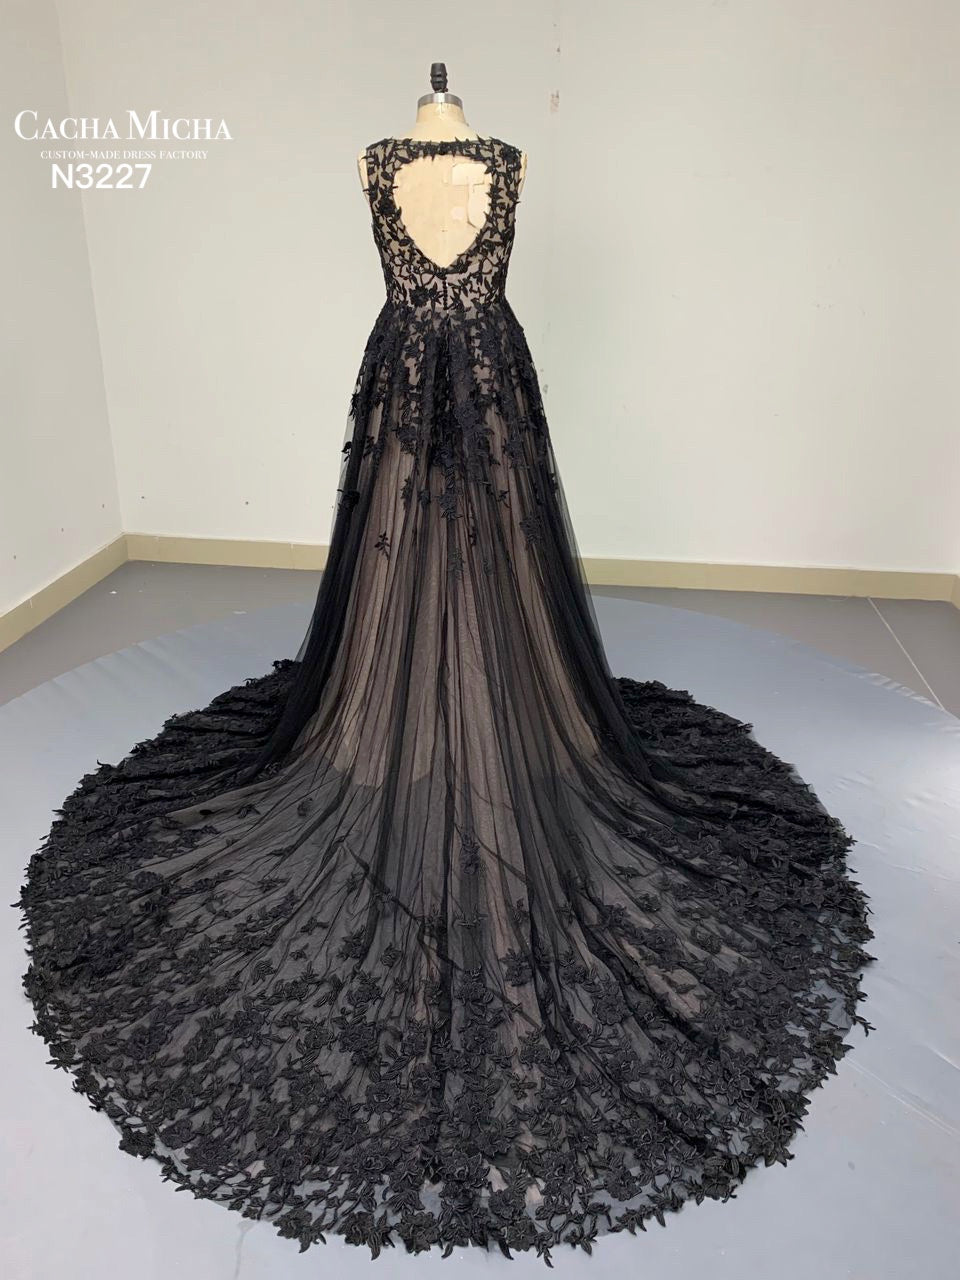 Keyhole Back Champagne And Black Lace Wedding Dress N3227